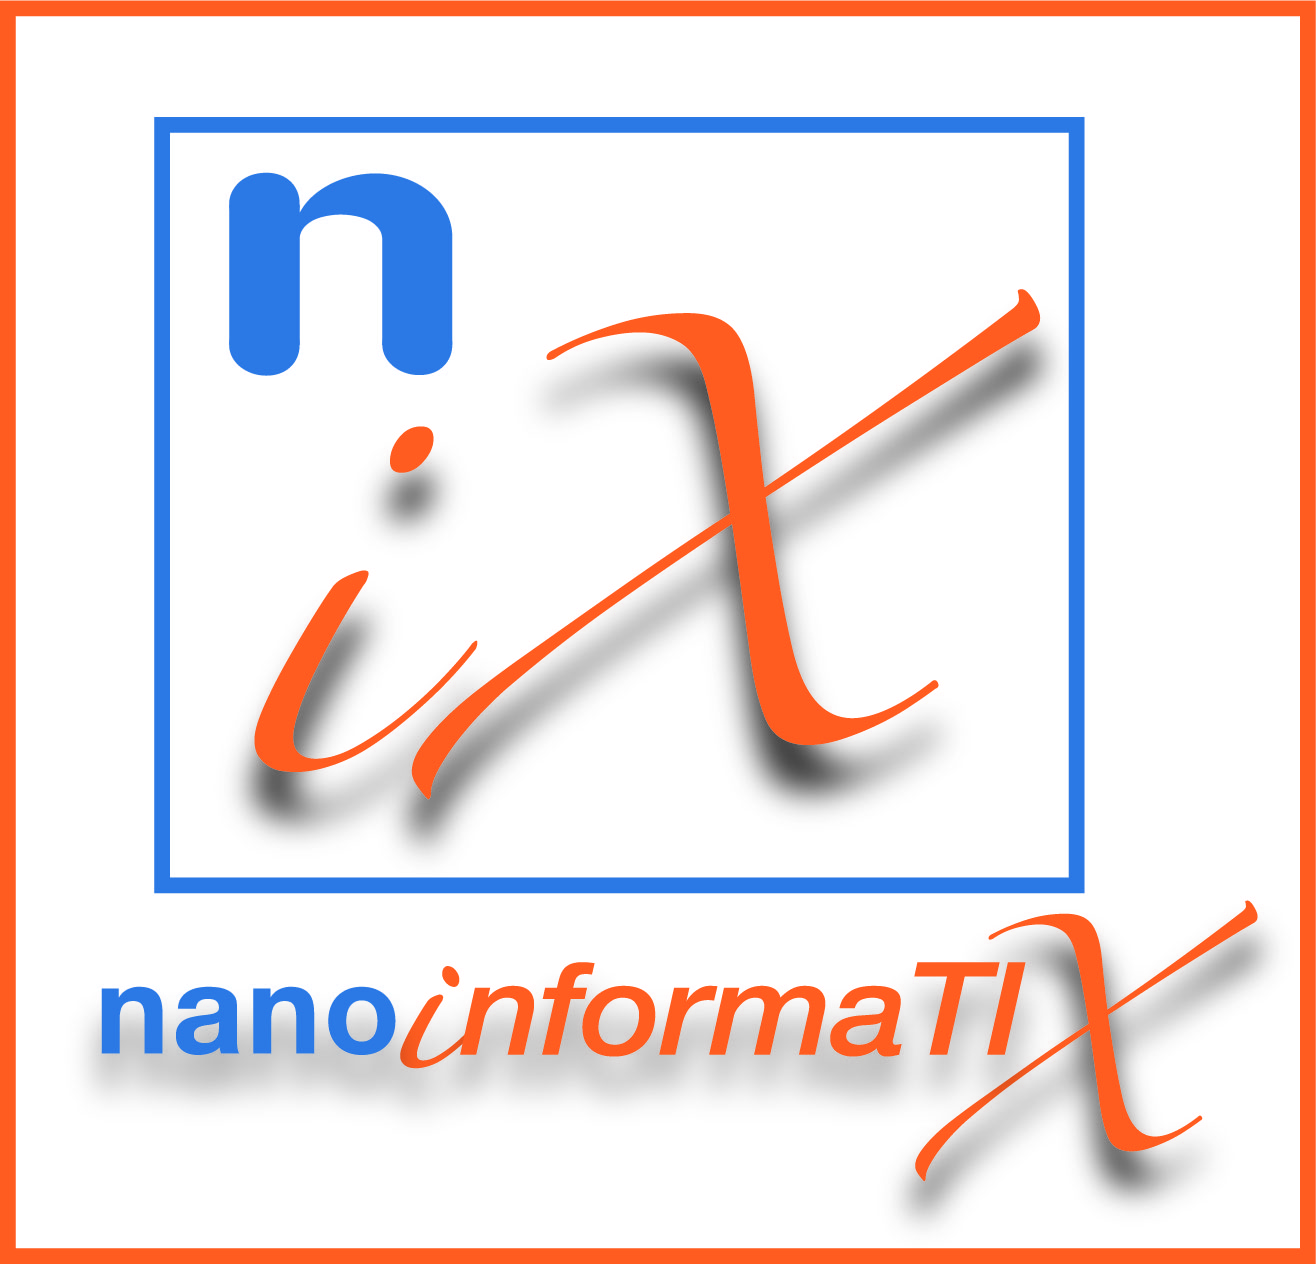 NanoInformaTIX logo